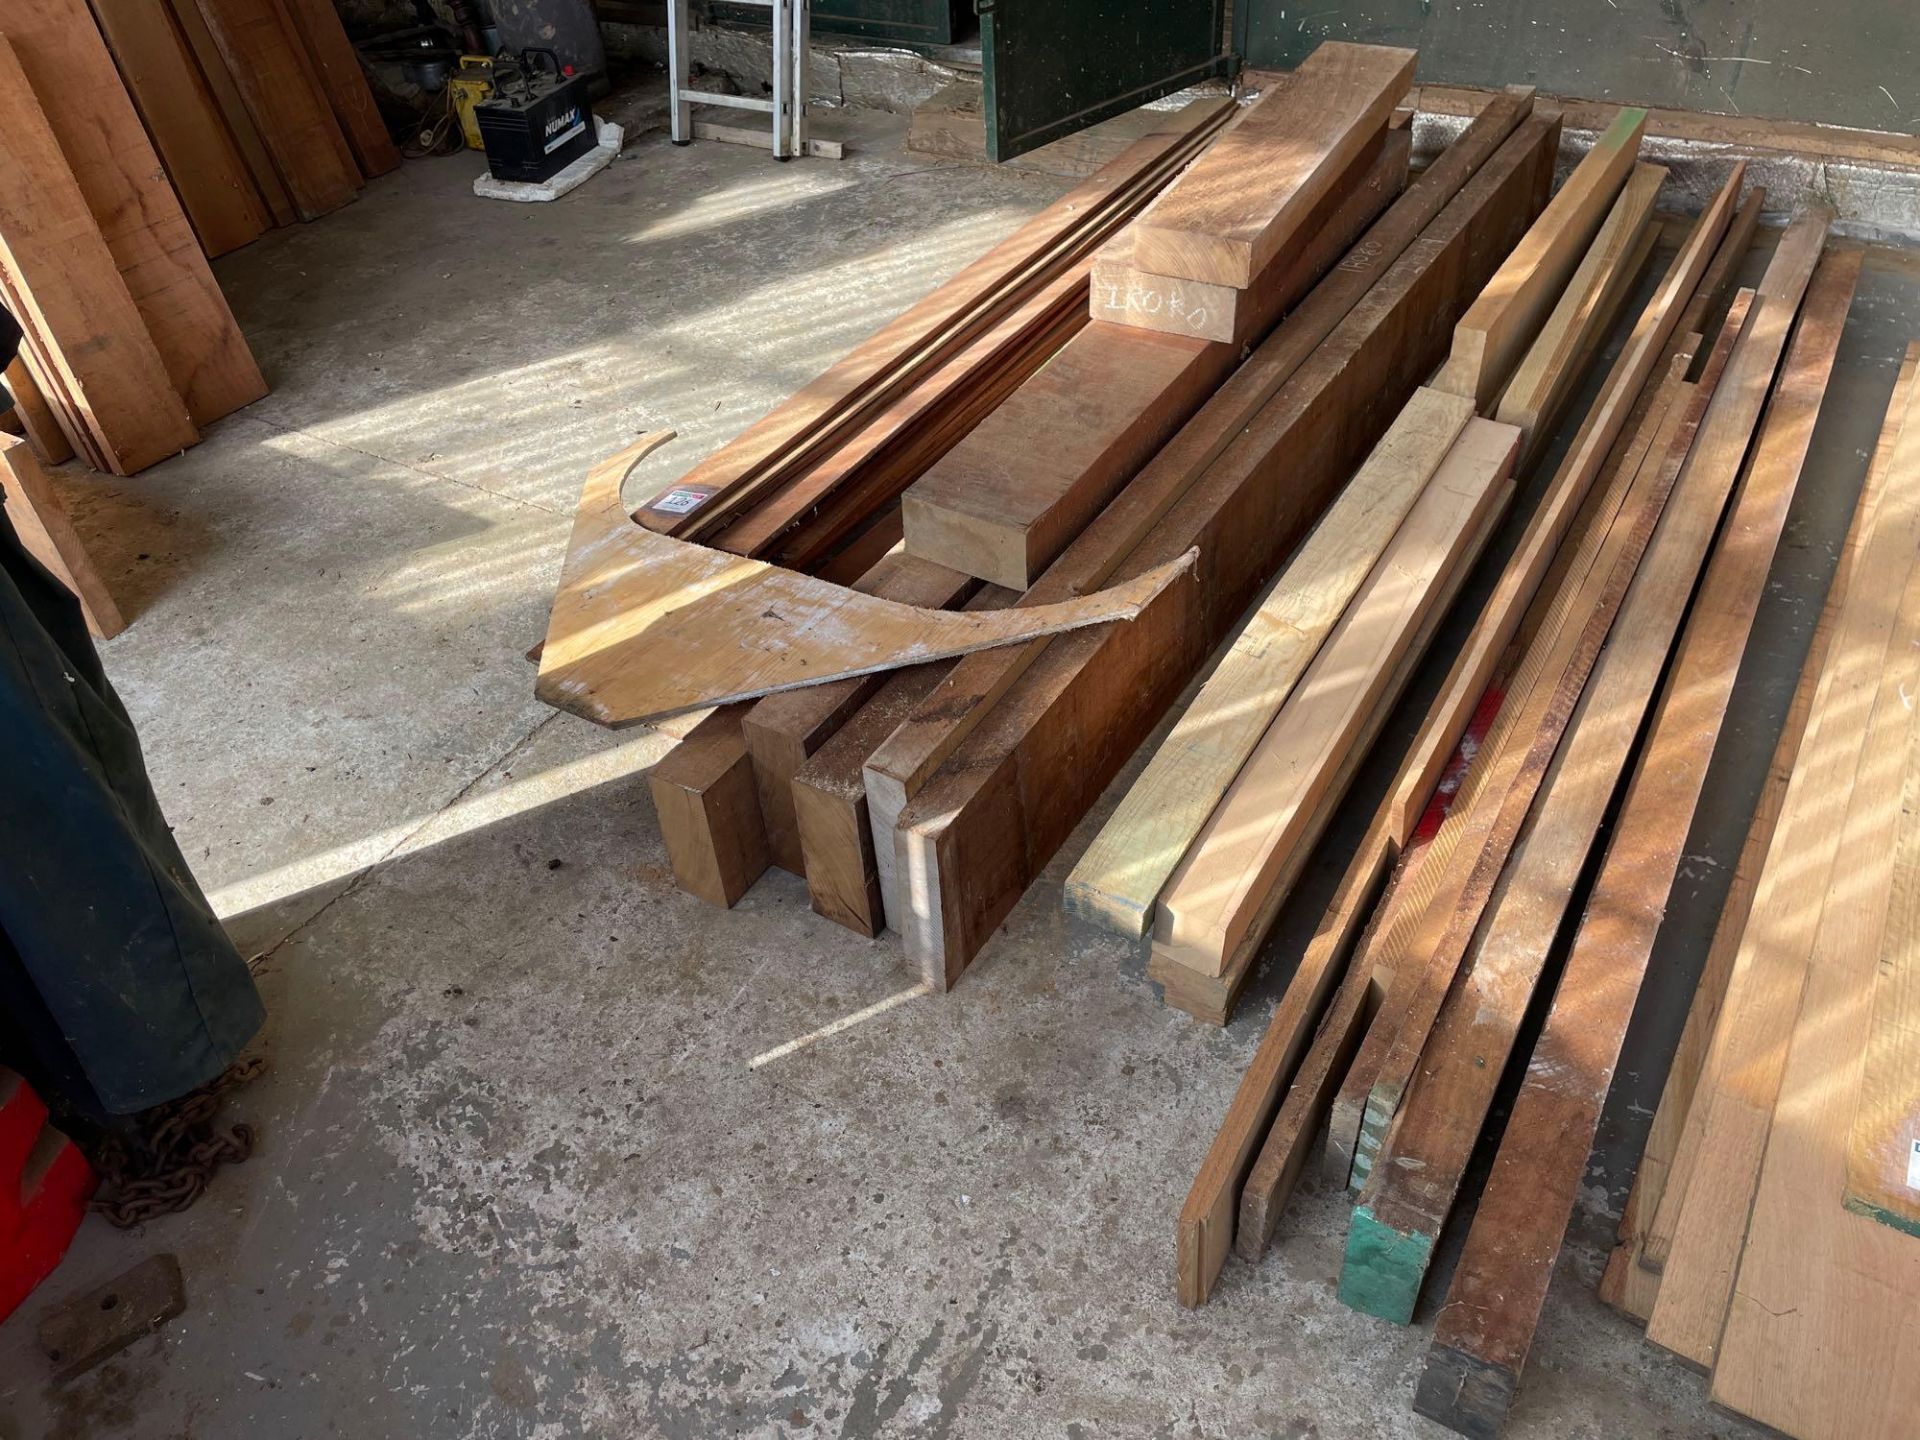 Quantity hardwood timber